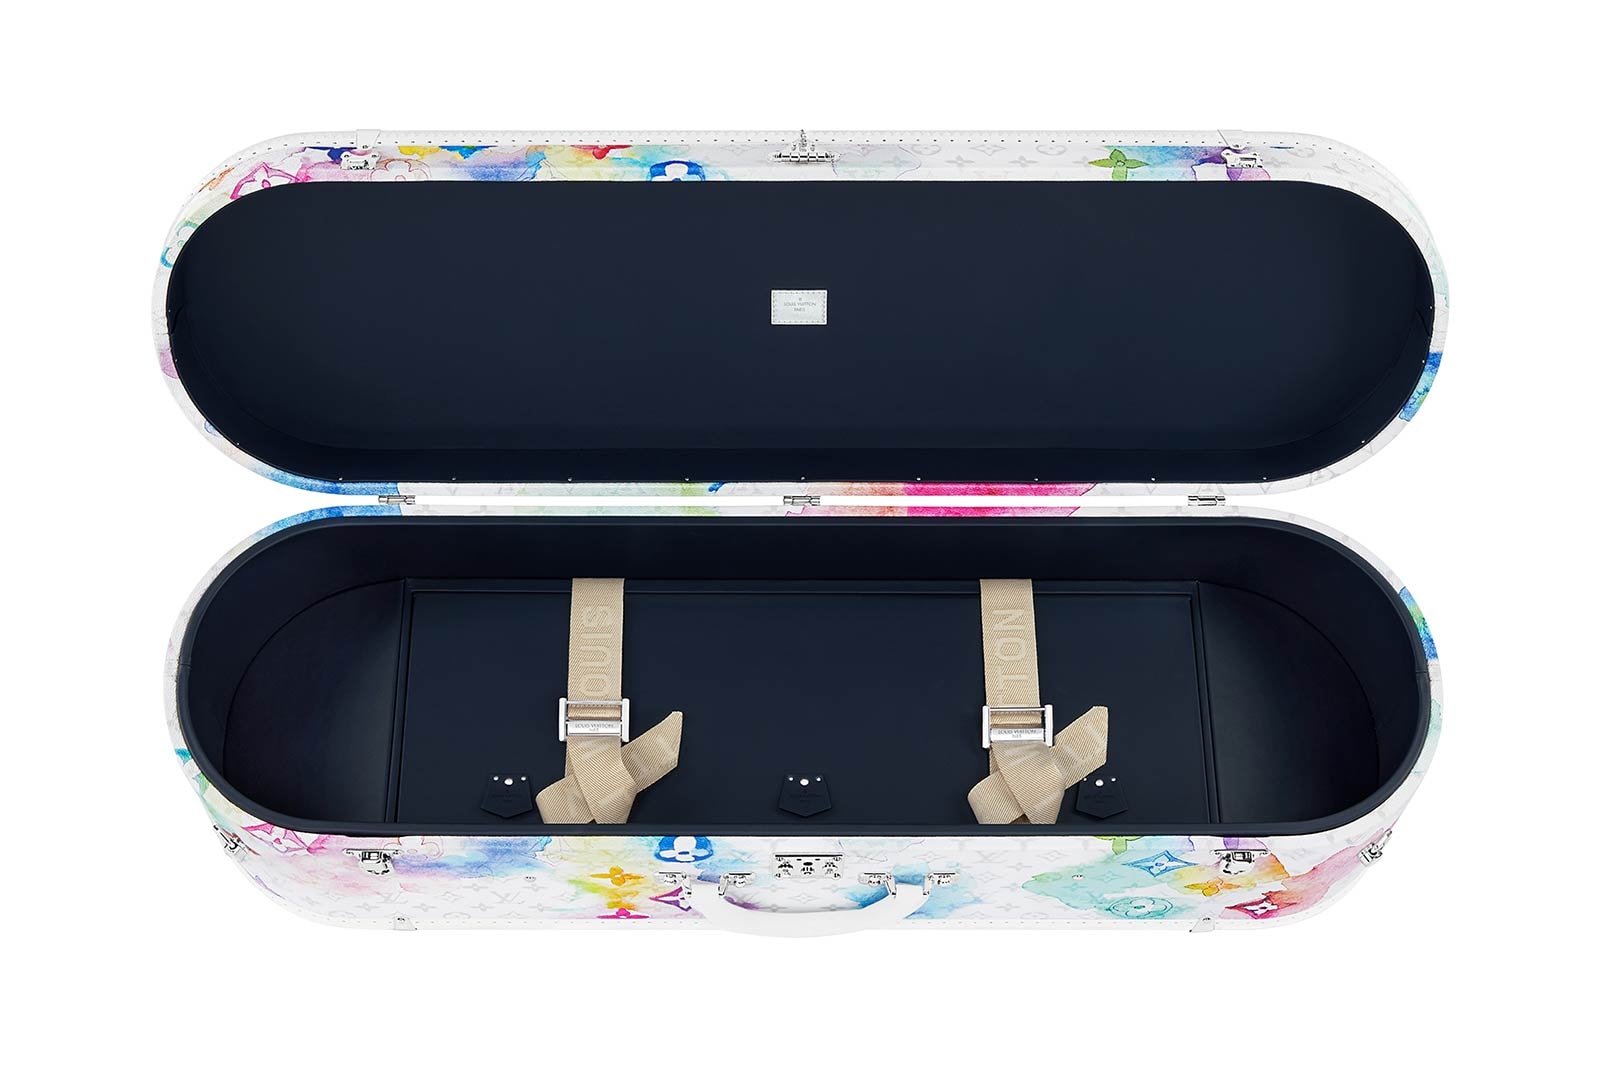 Louis Vuitton Skateboard Trunk Closer Look virgil abloh luxury sports skate decks fashion monogram trunks 